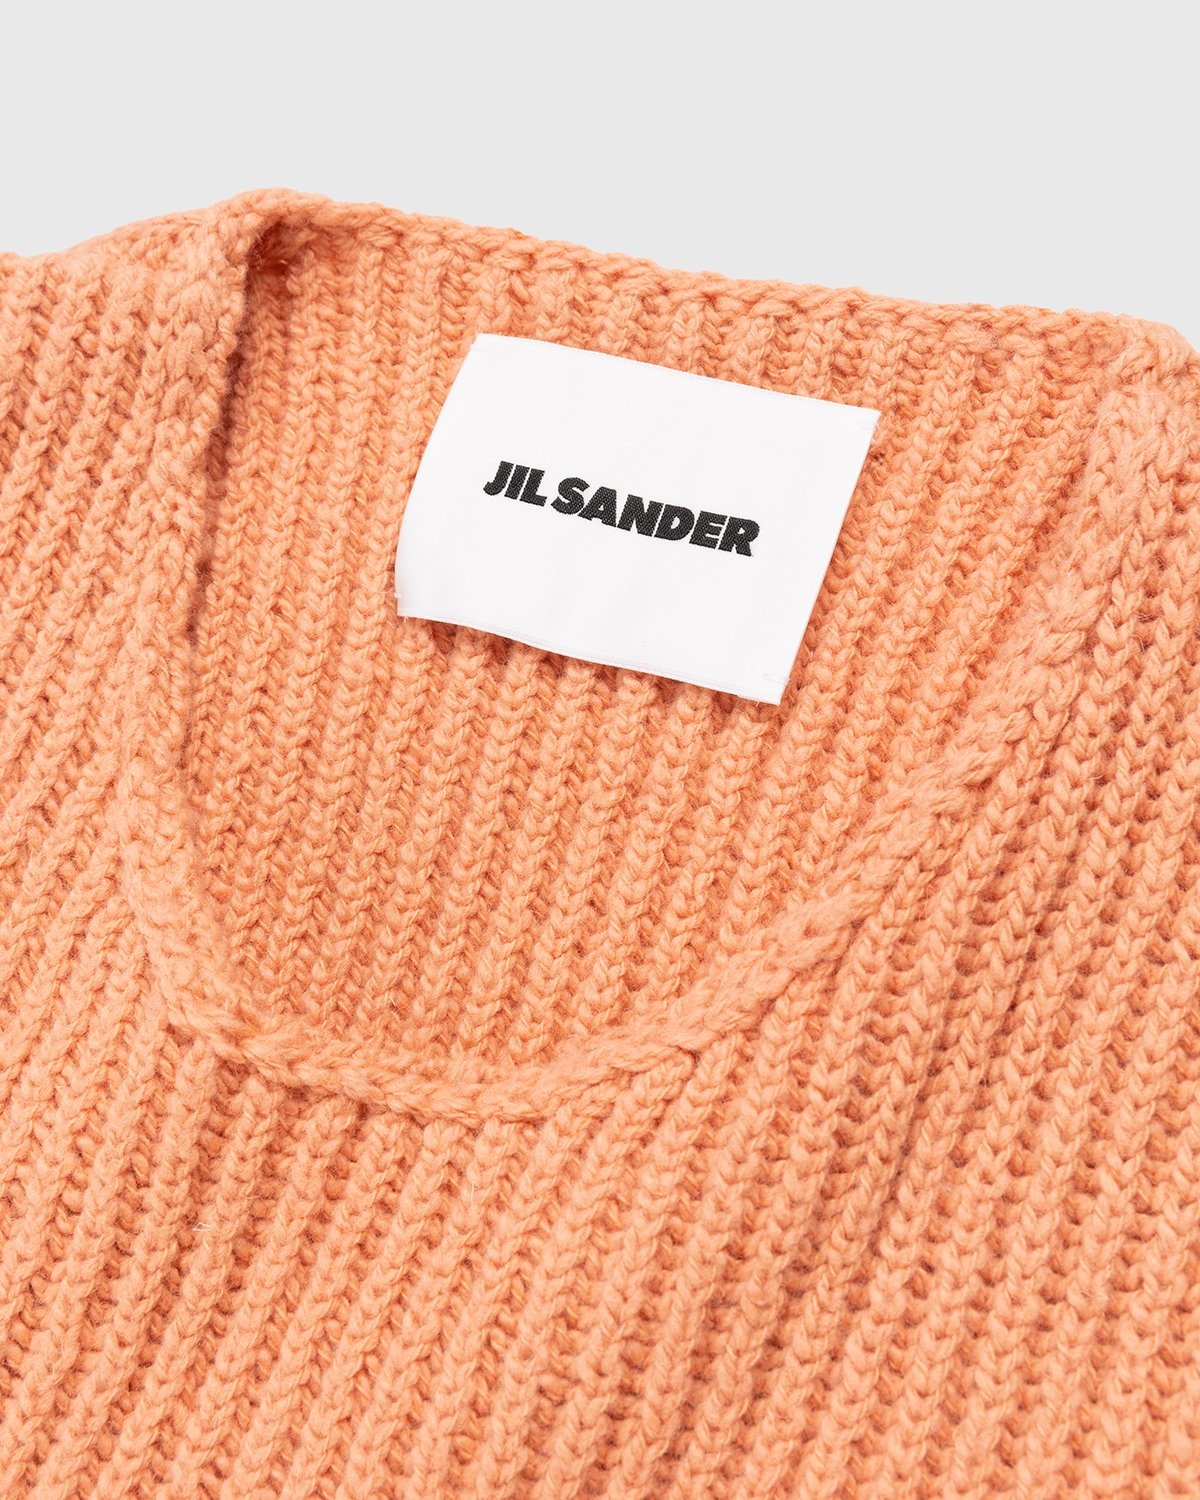 Jil Sander – Rib Knit Vest Orange - Knitwear - Orange - Image 6